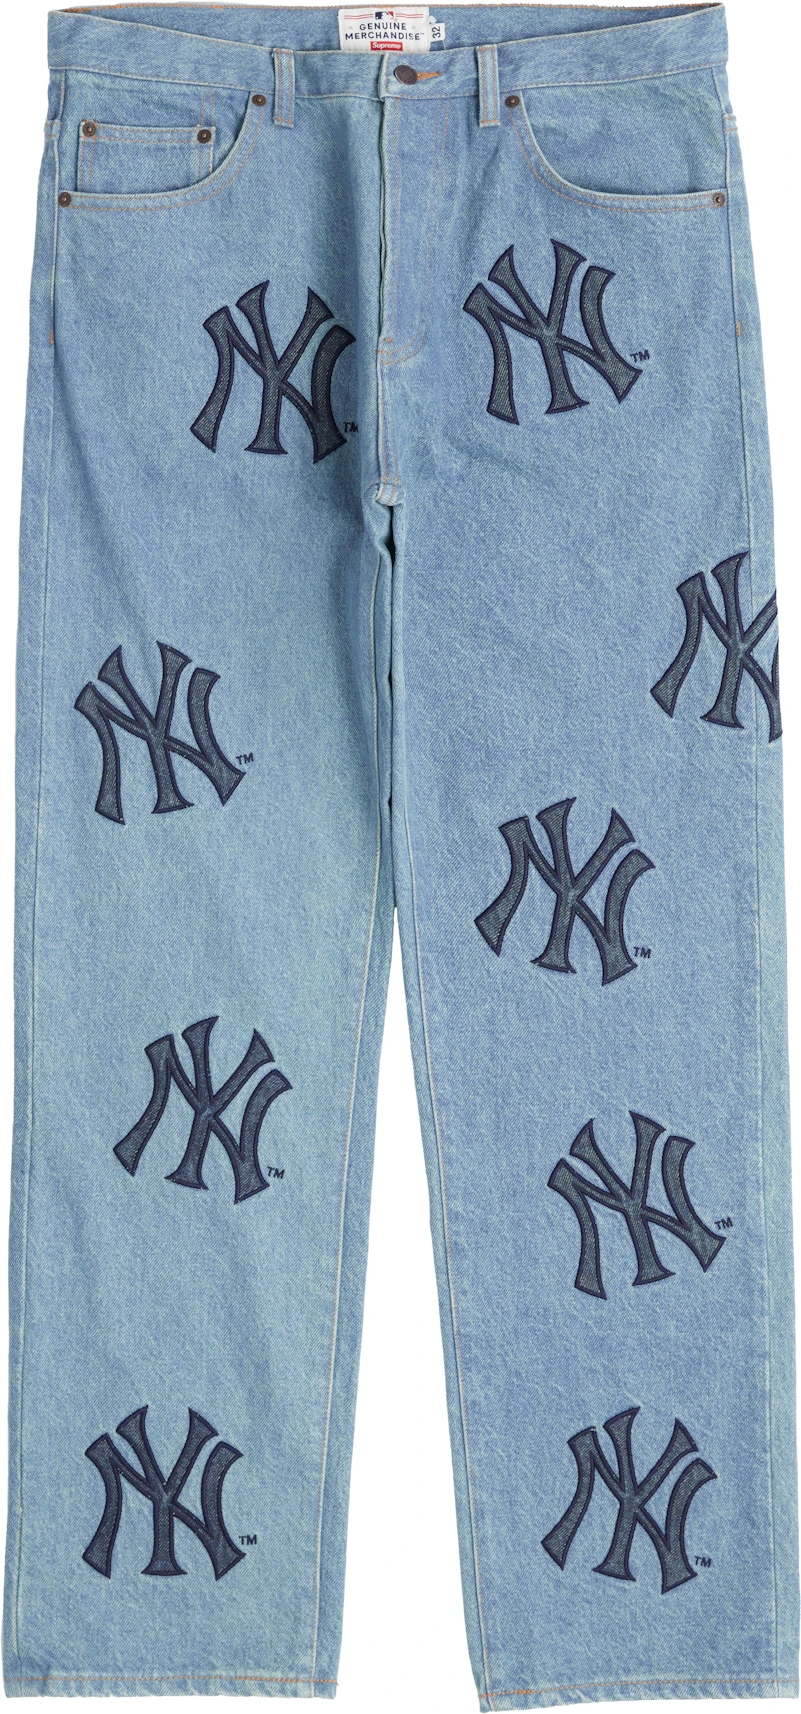 Supreme x New York Yankees Regular Washed Blue FW21 ES